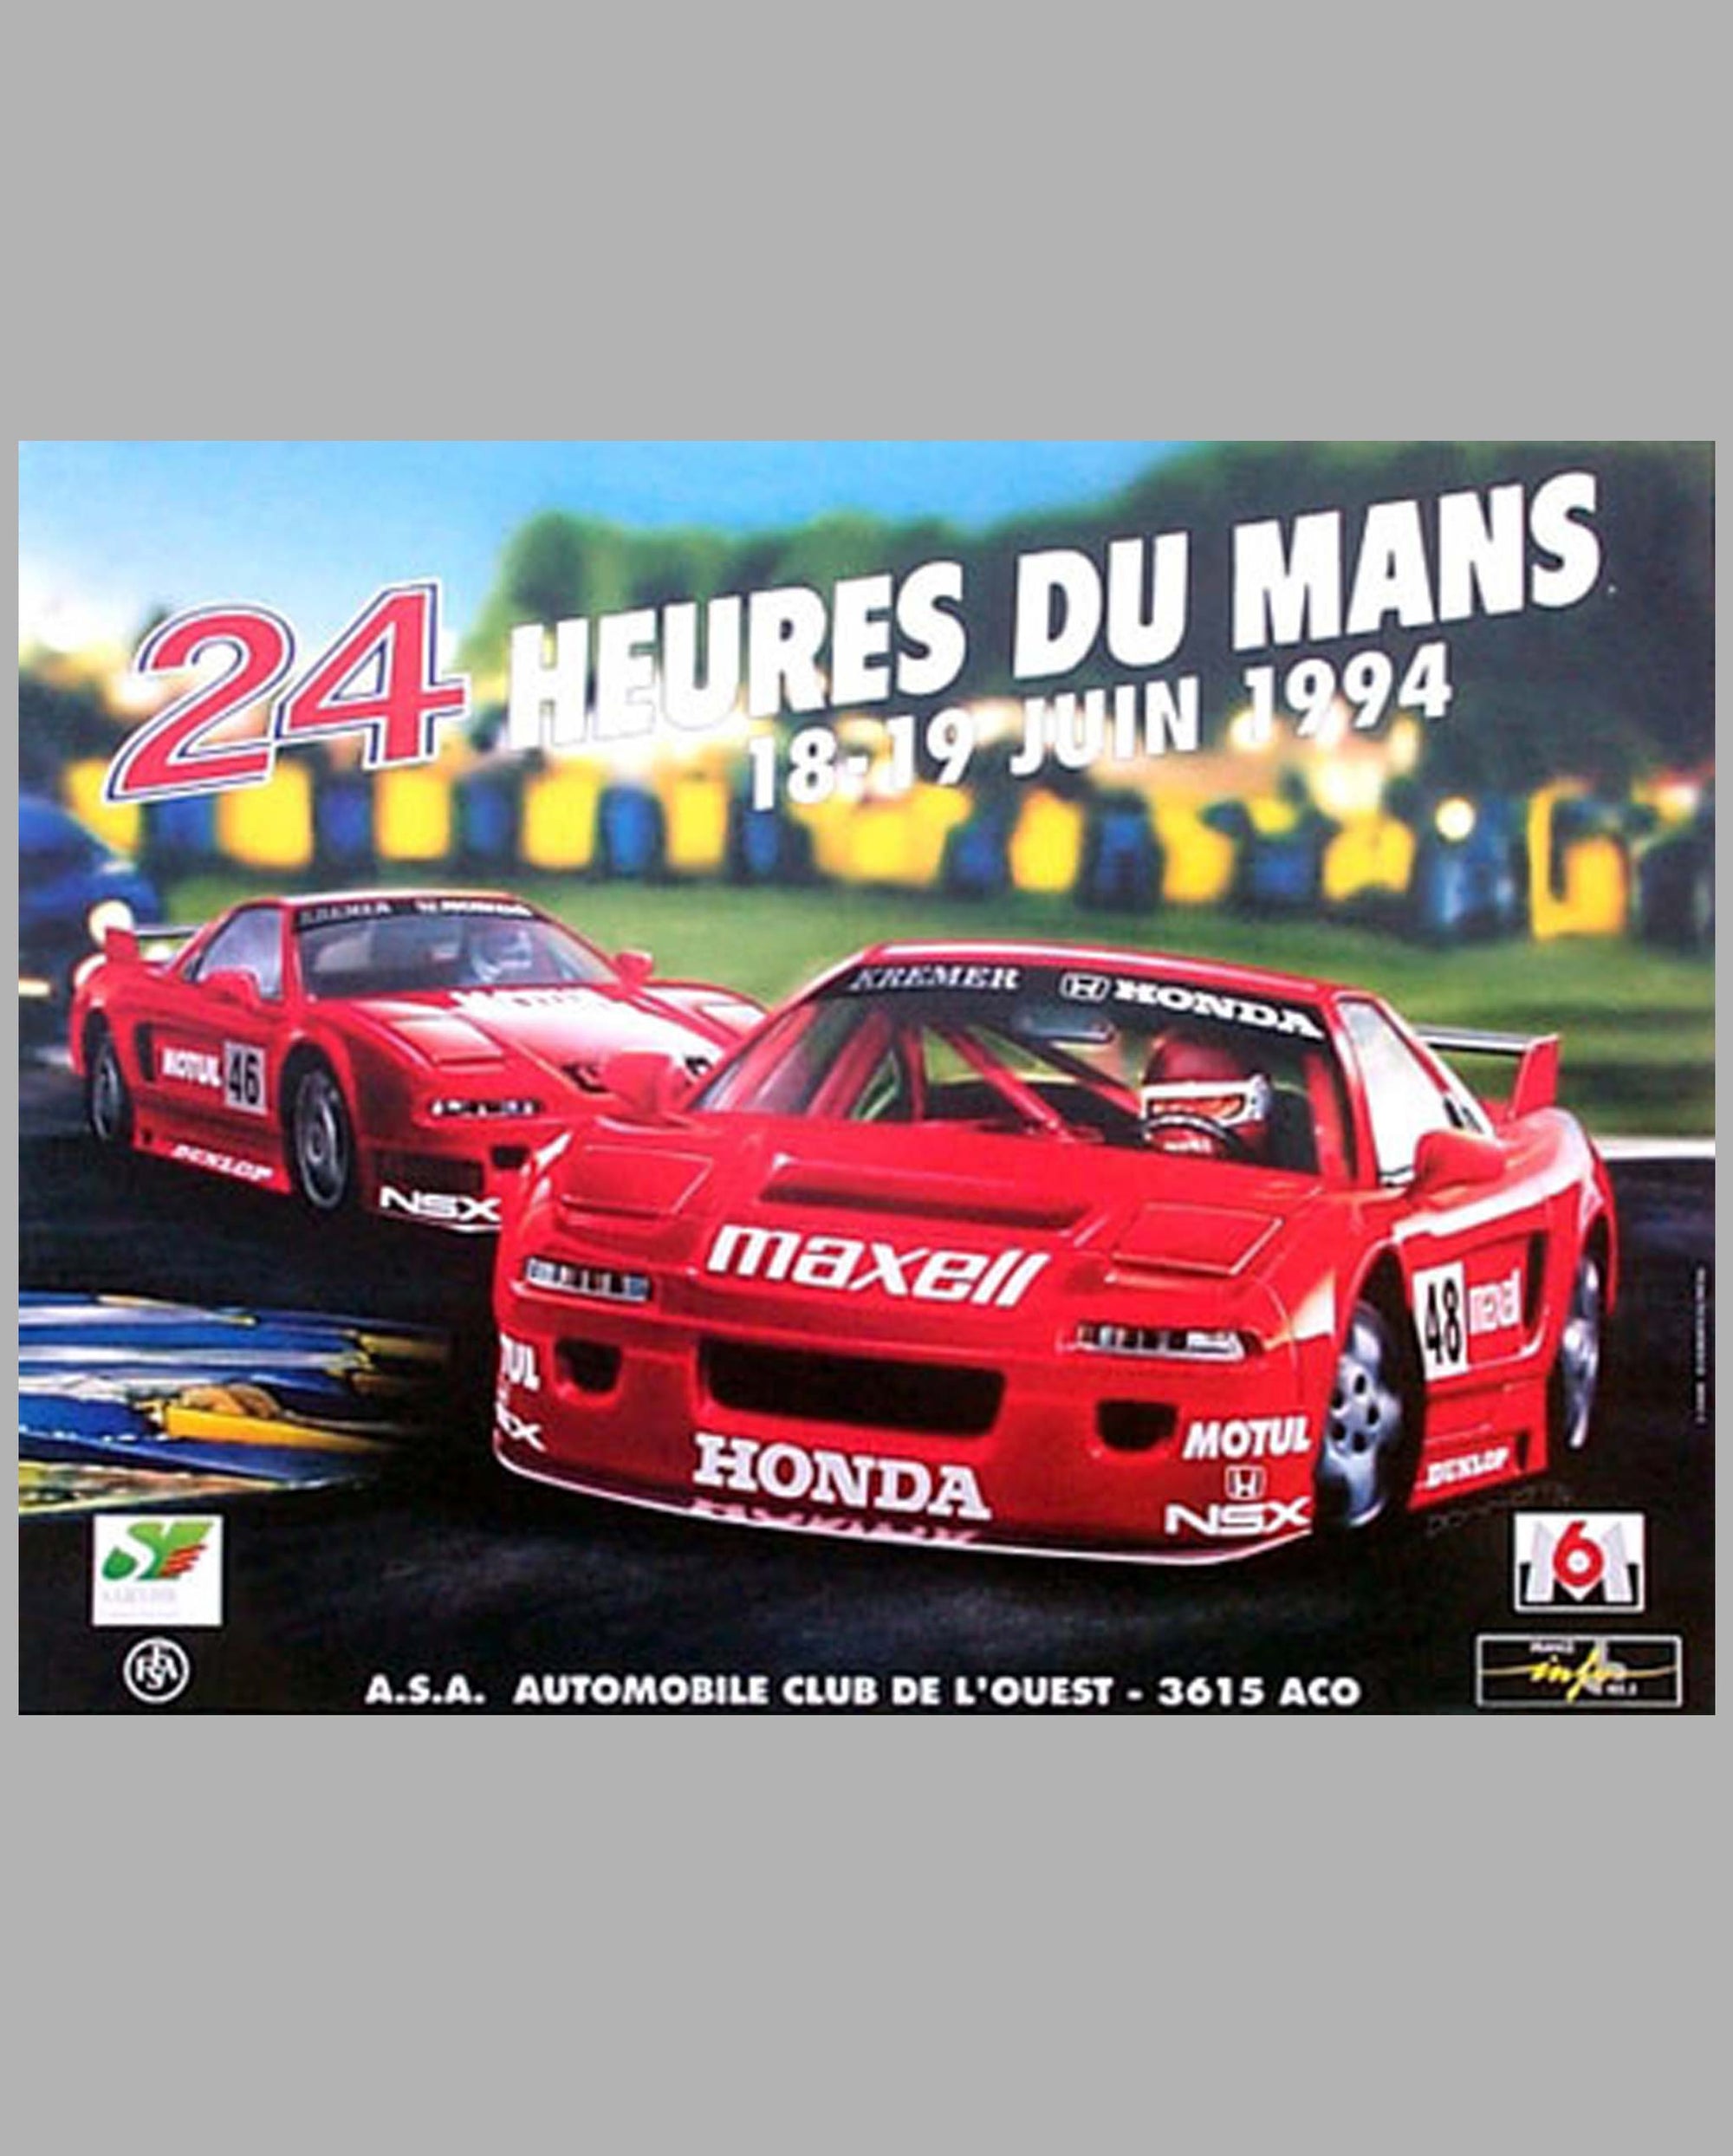 1994 - 24 Heures du Mans Original Poster